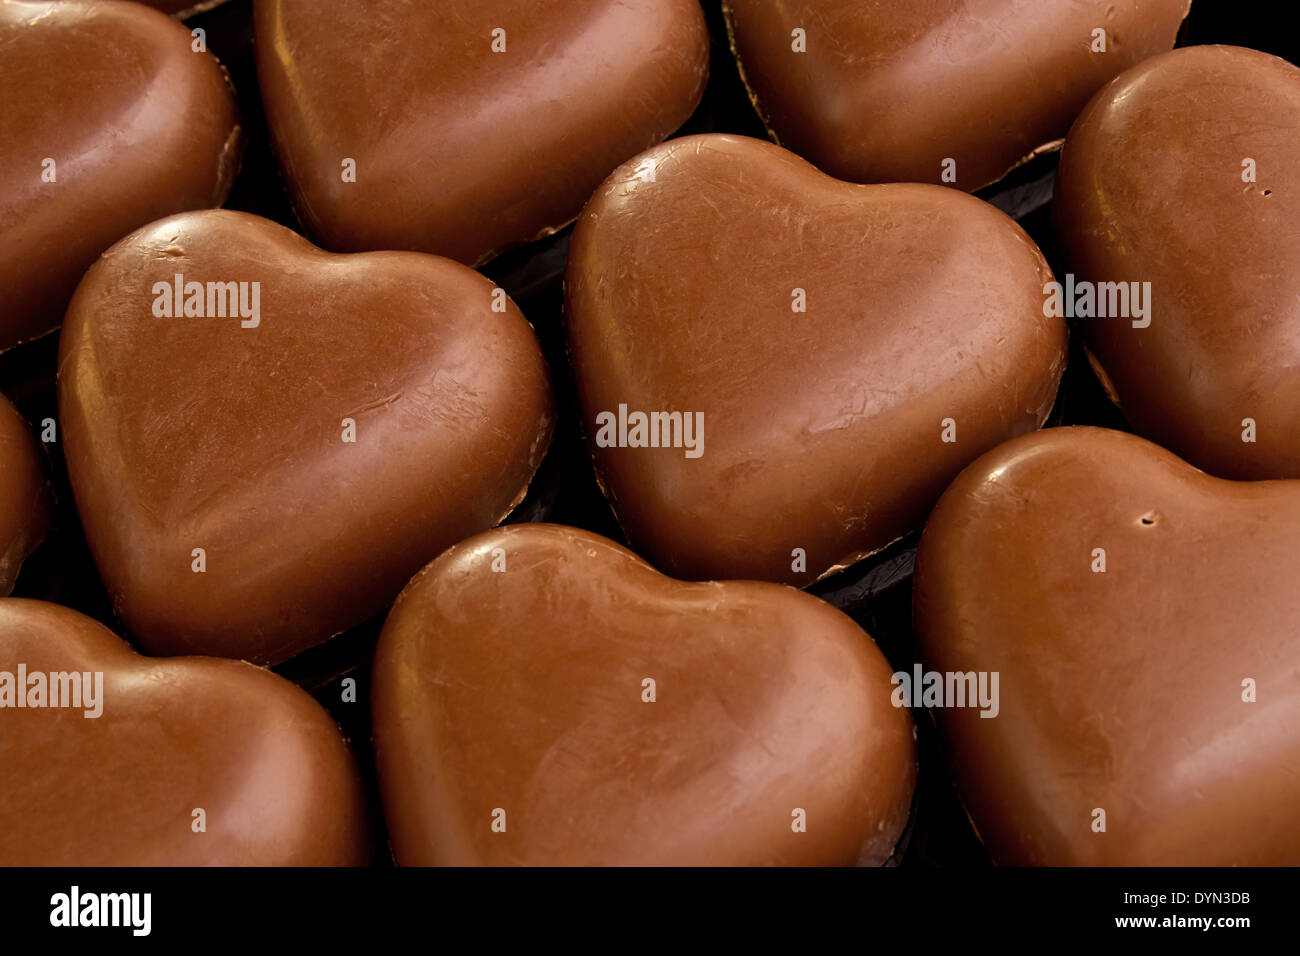 Dia de san valentin chocolate, amor chocolate, amor, corazón